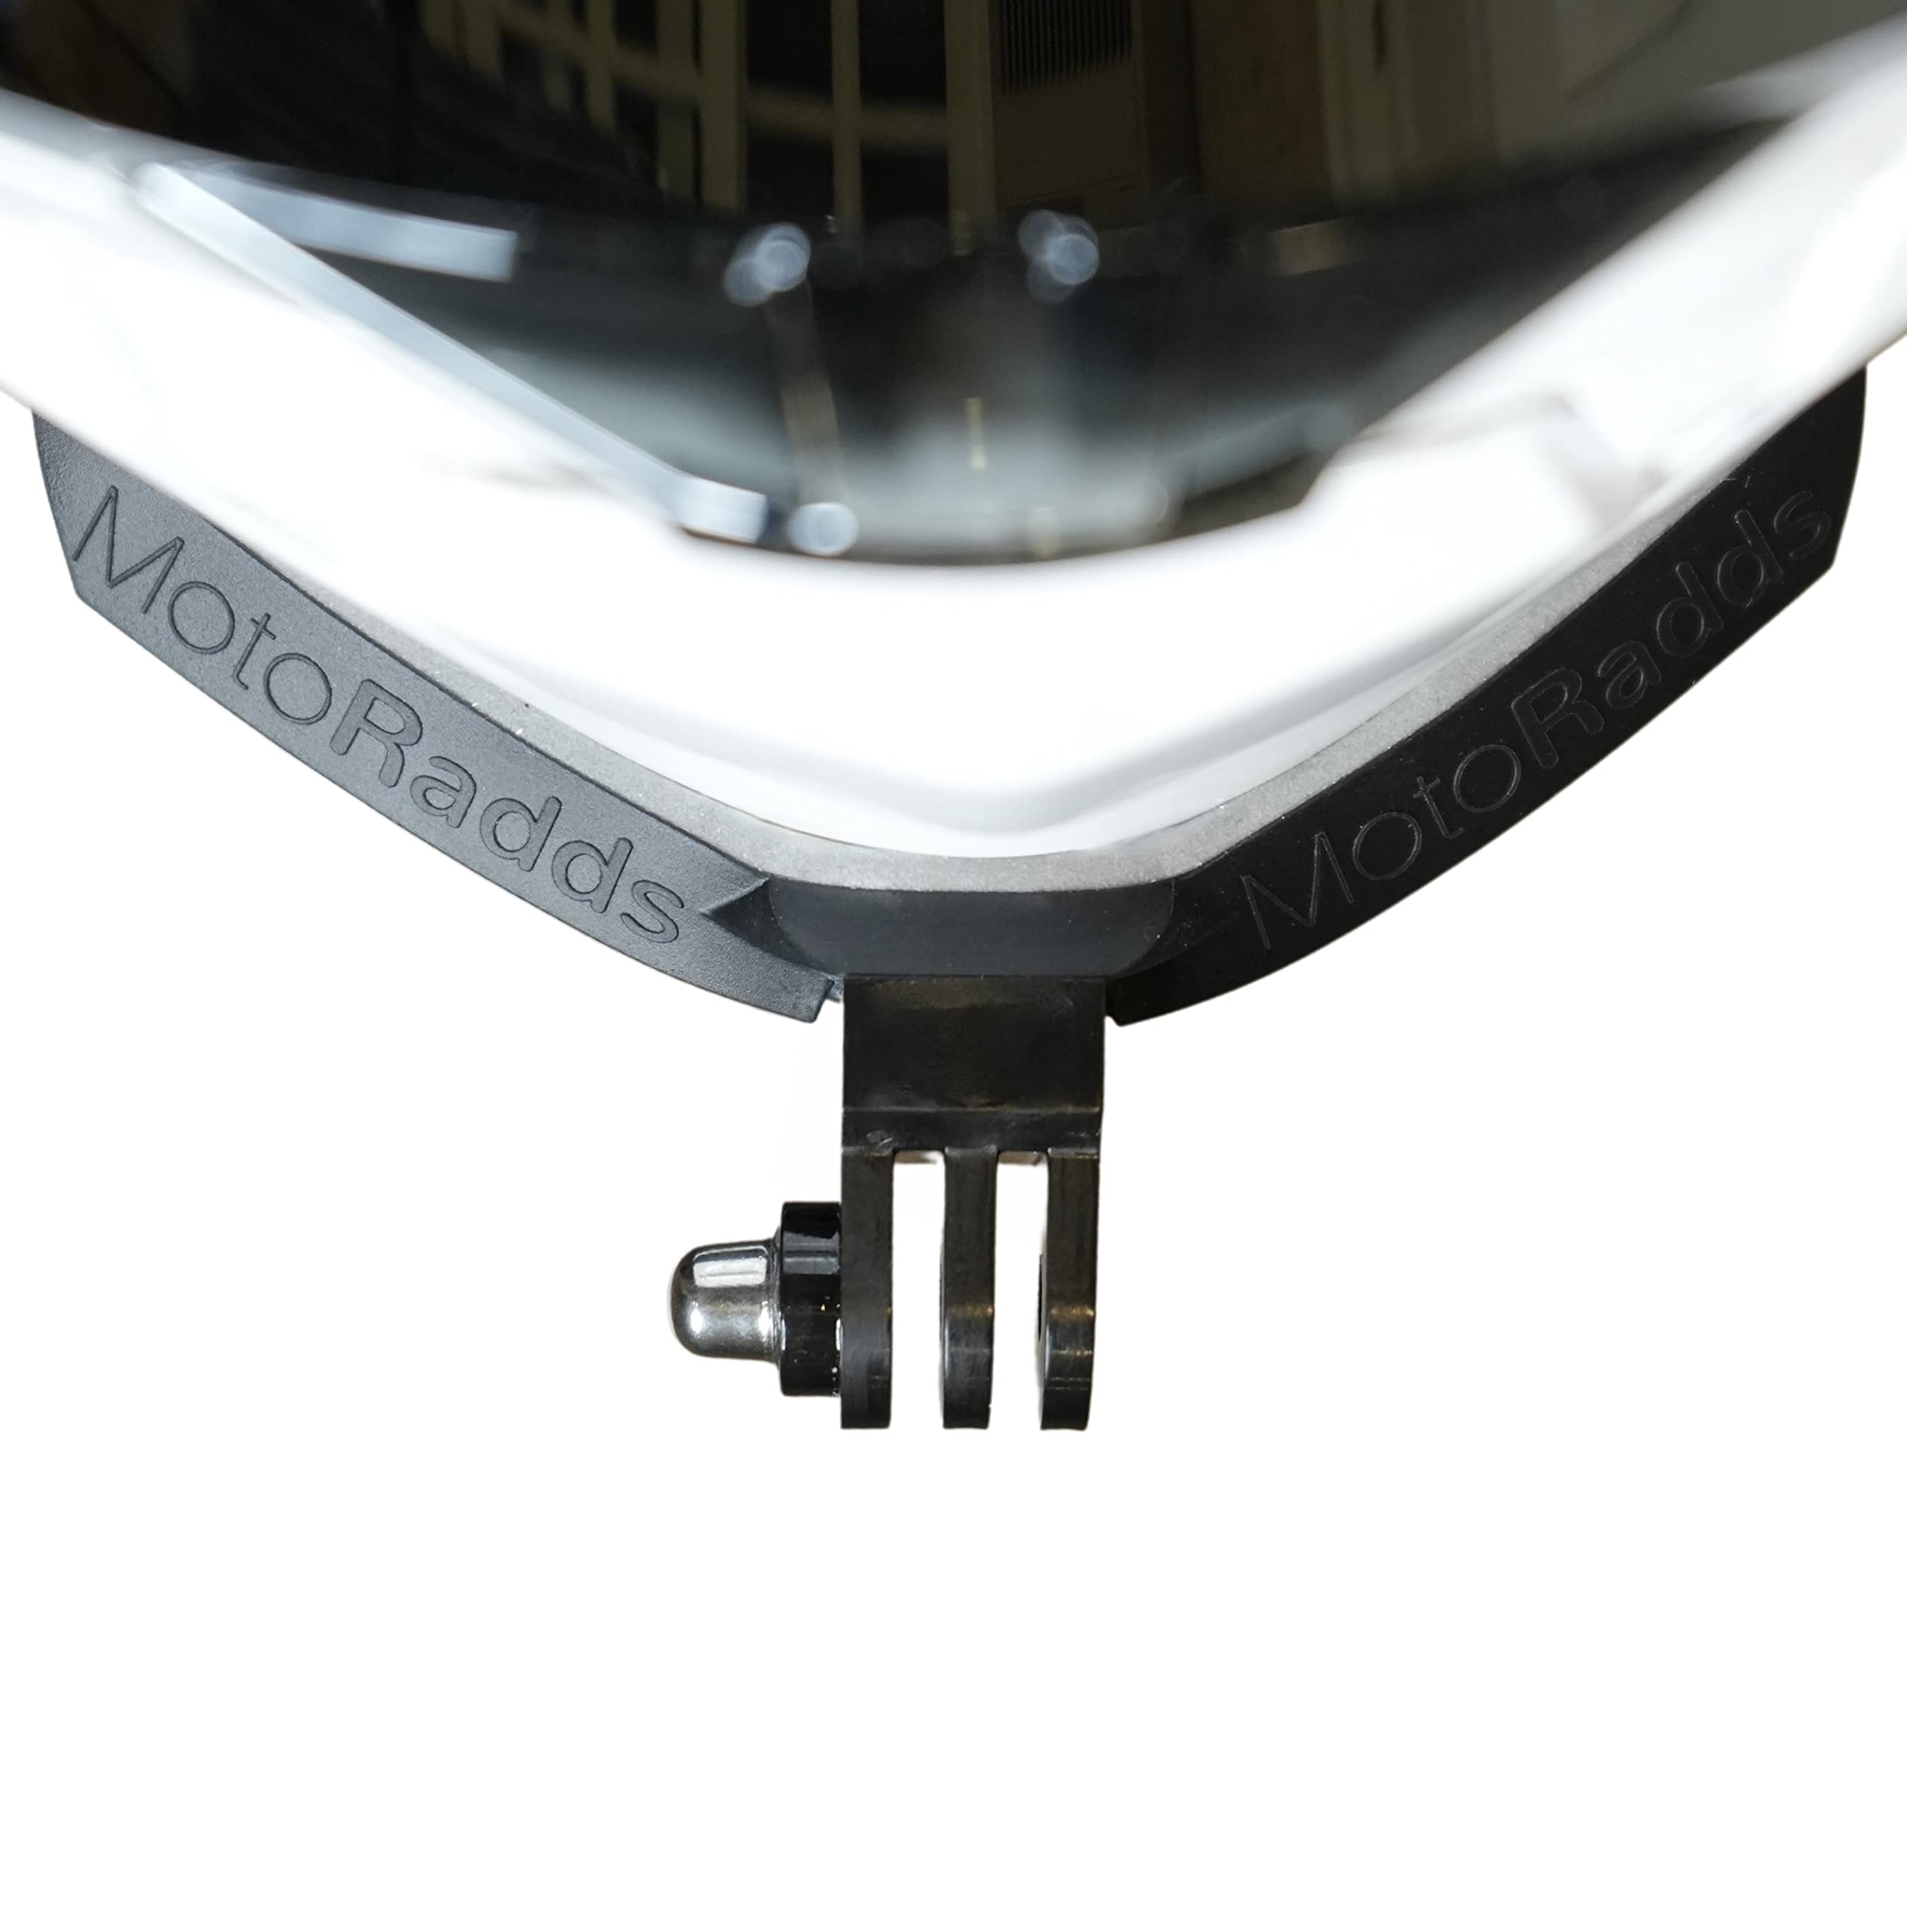 MotoRadds Flex Slim Flexible Universal Motorcycle Helmet Chin Mount Kit Bendable Silicone Compatible with GoPro Hero 12, 11, 10, DJI Osmo Action, Insta360, SJCAM, Xiaomi Yi Action Cameras (White)